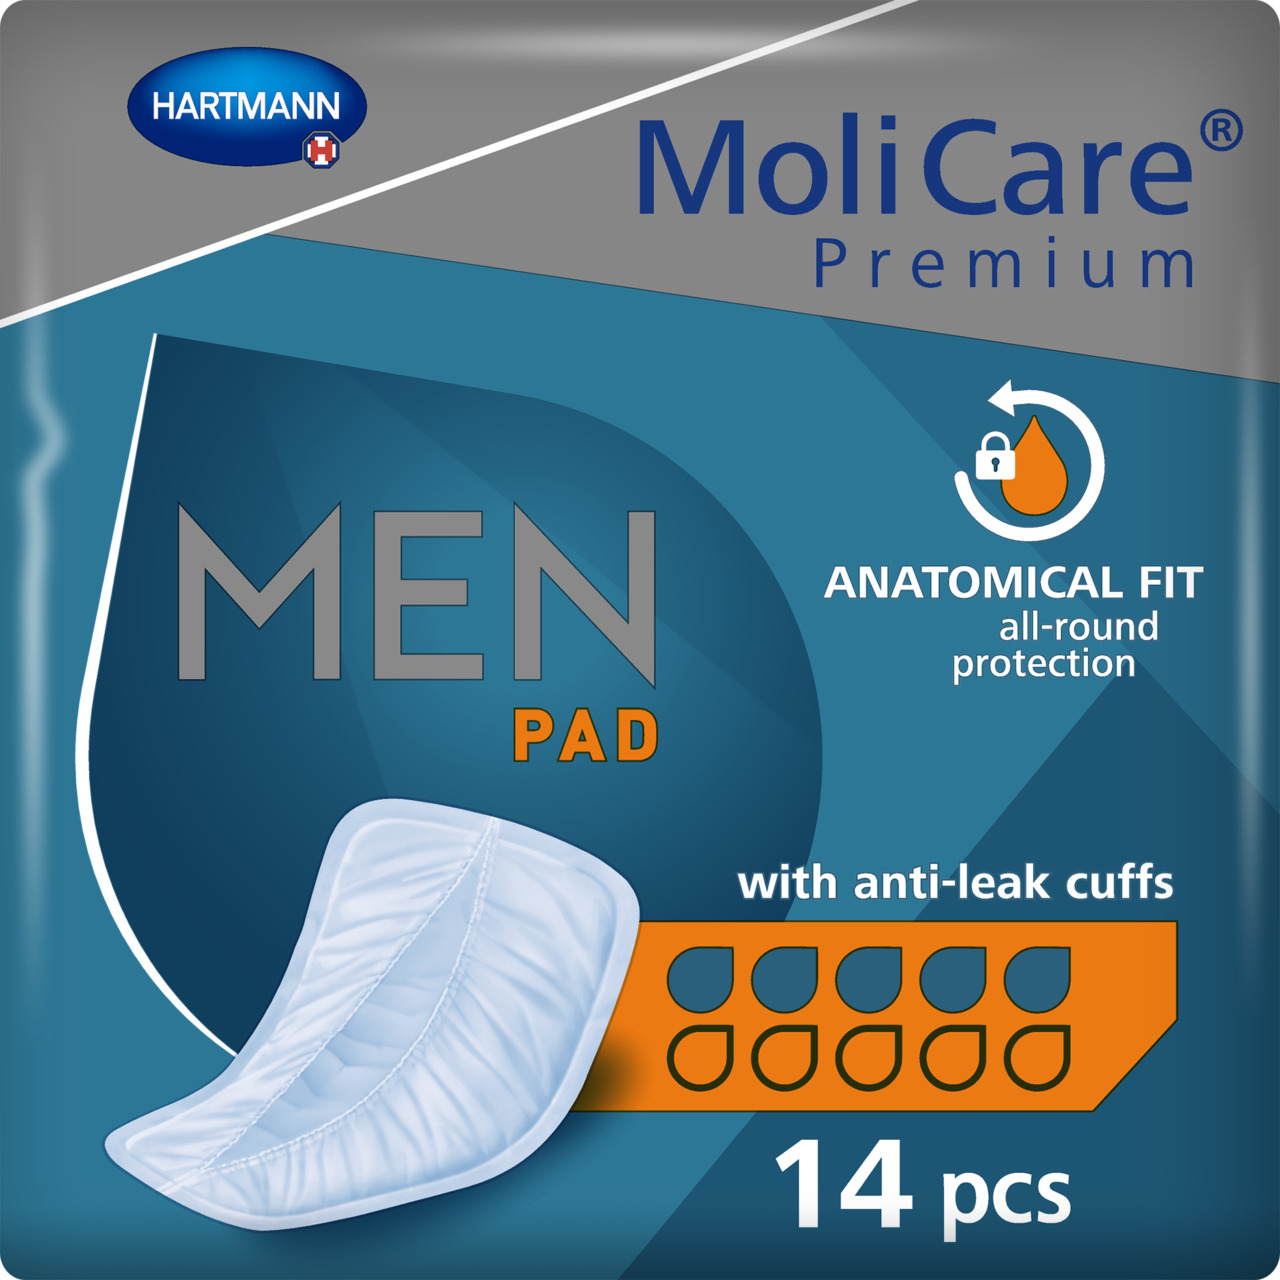 MoliCare® Premium Men Pad 5 Drops